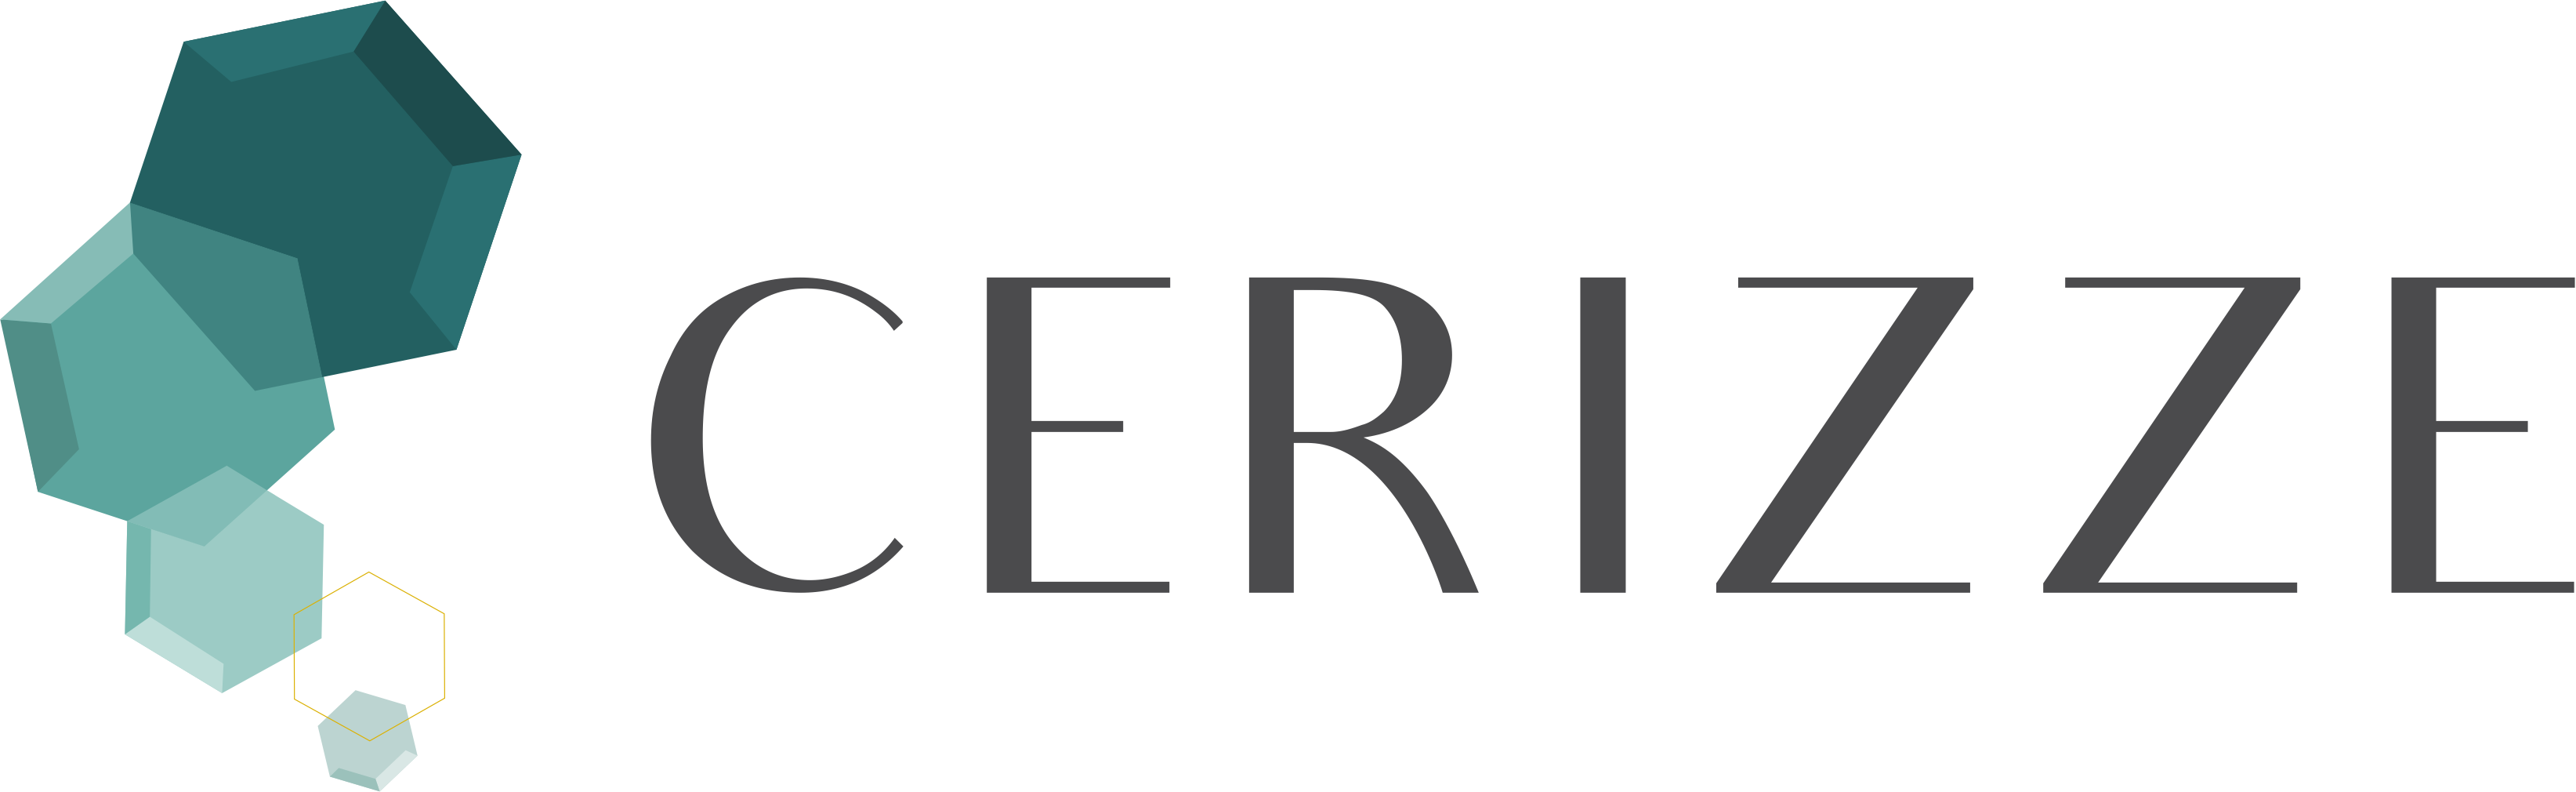 cropped-cerizze-nova-logo